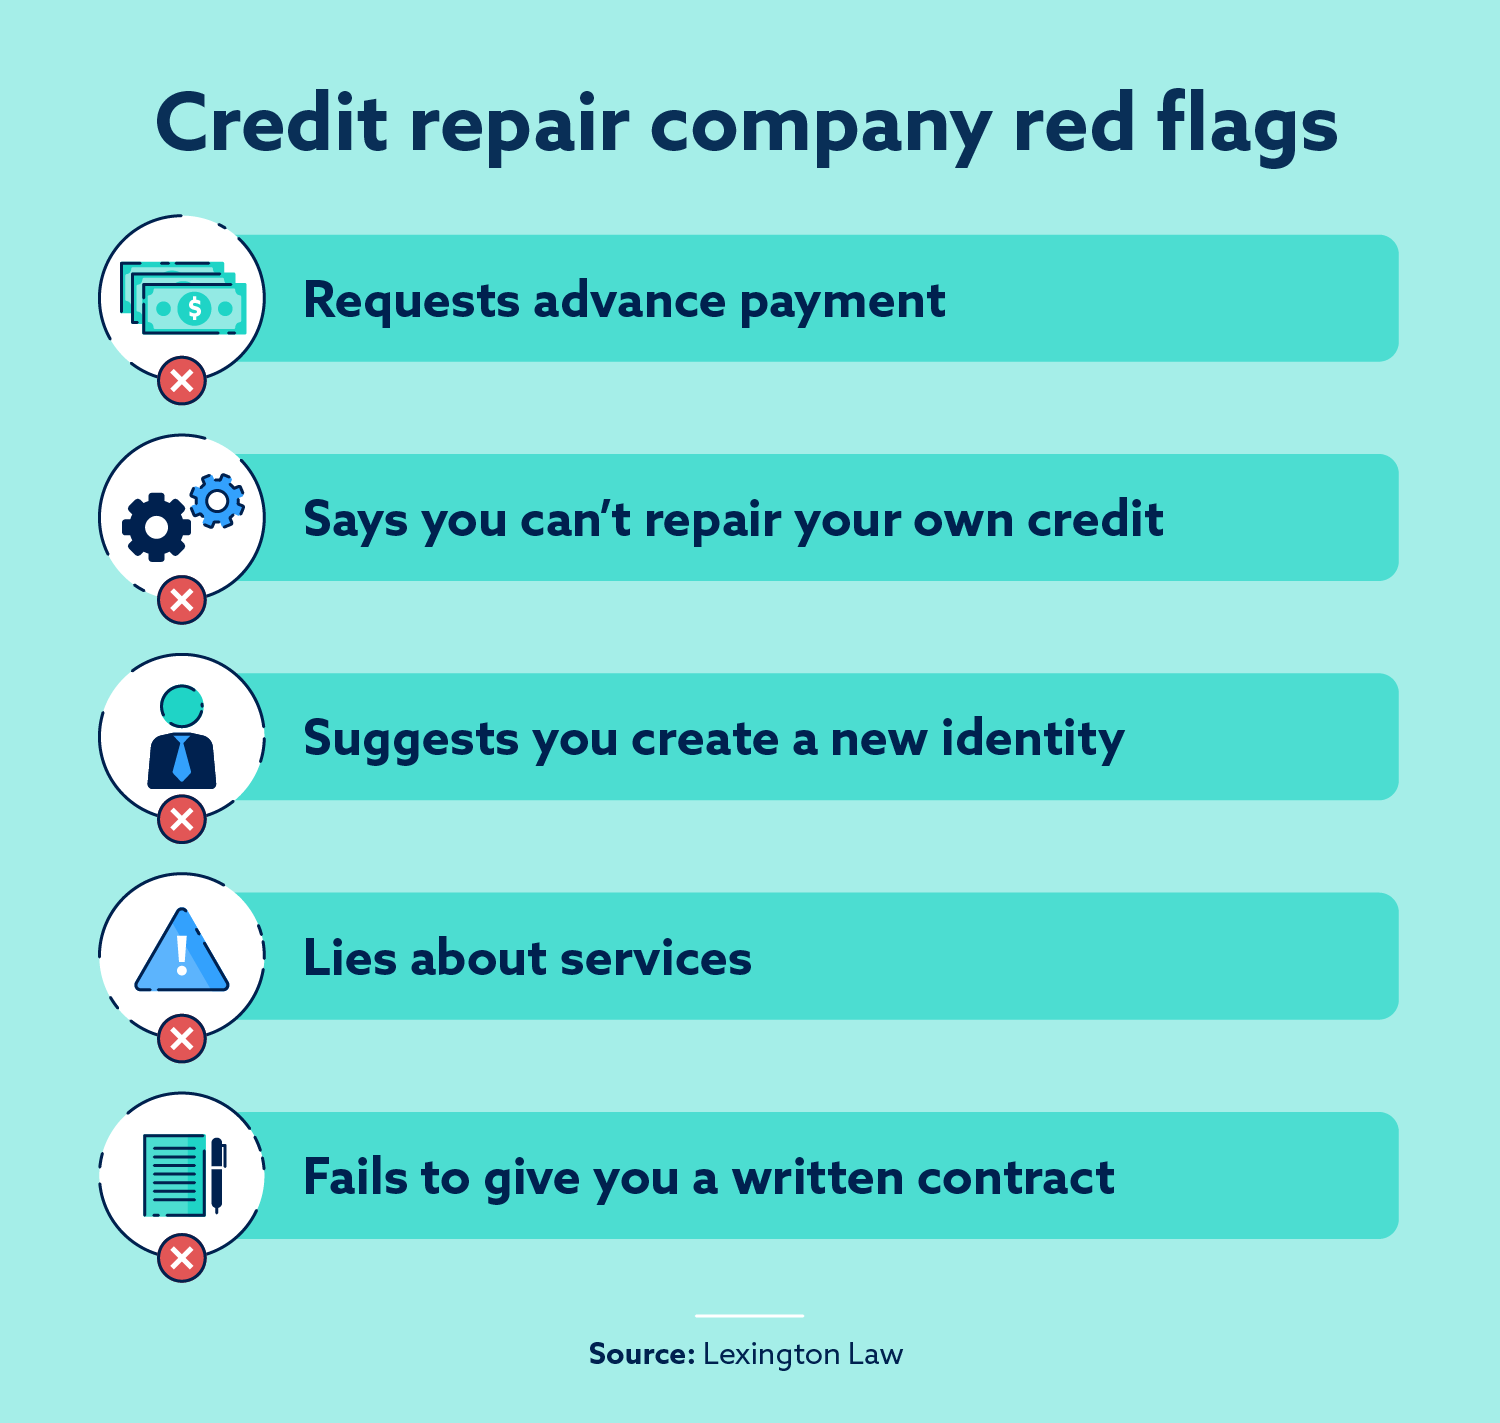 Are Credit Repair Companies Legit?